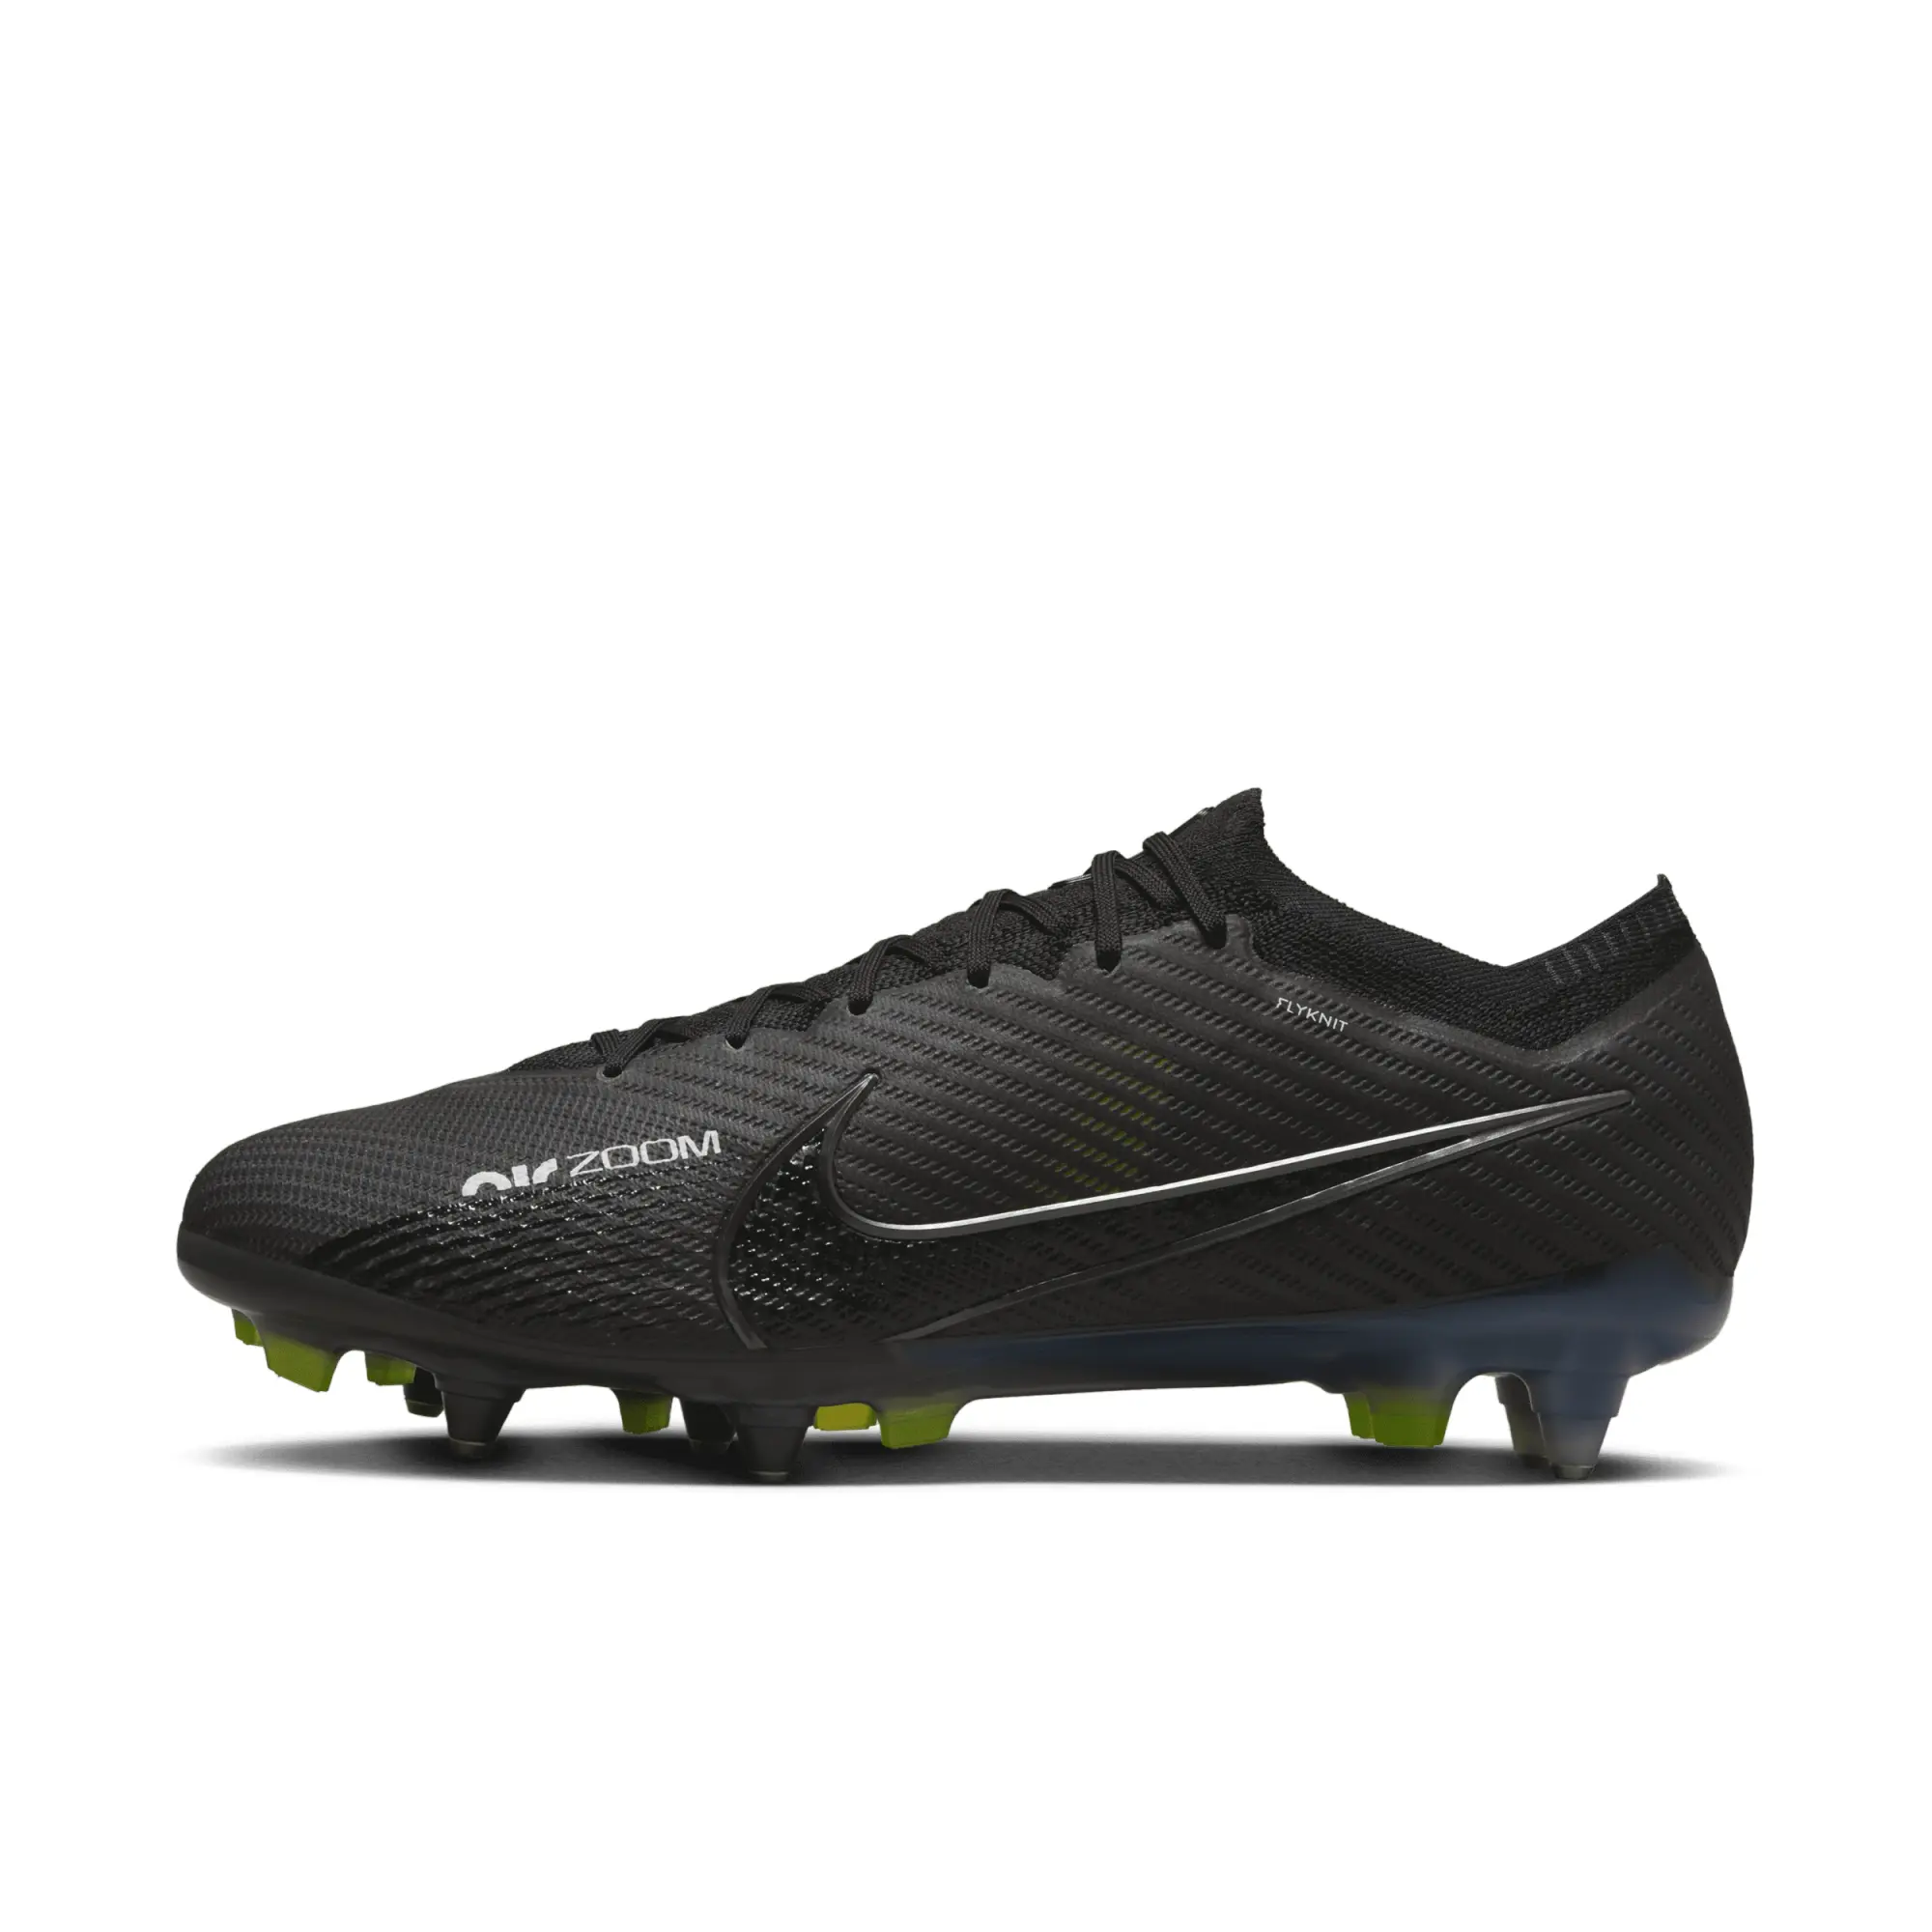 Nike Mercurial Vapor Elite Soft Ground Football Boots - Black